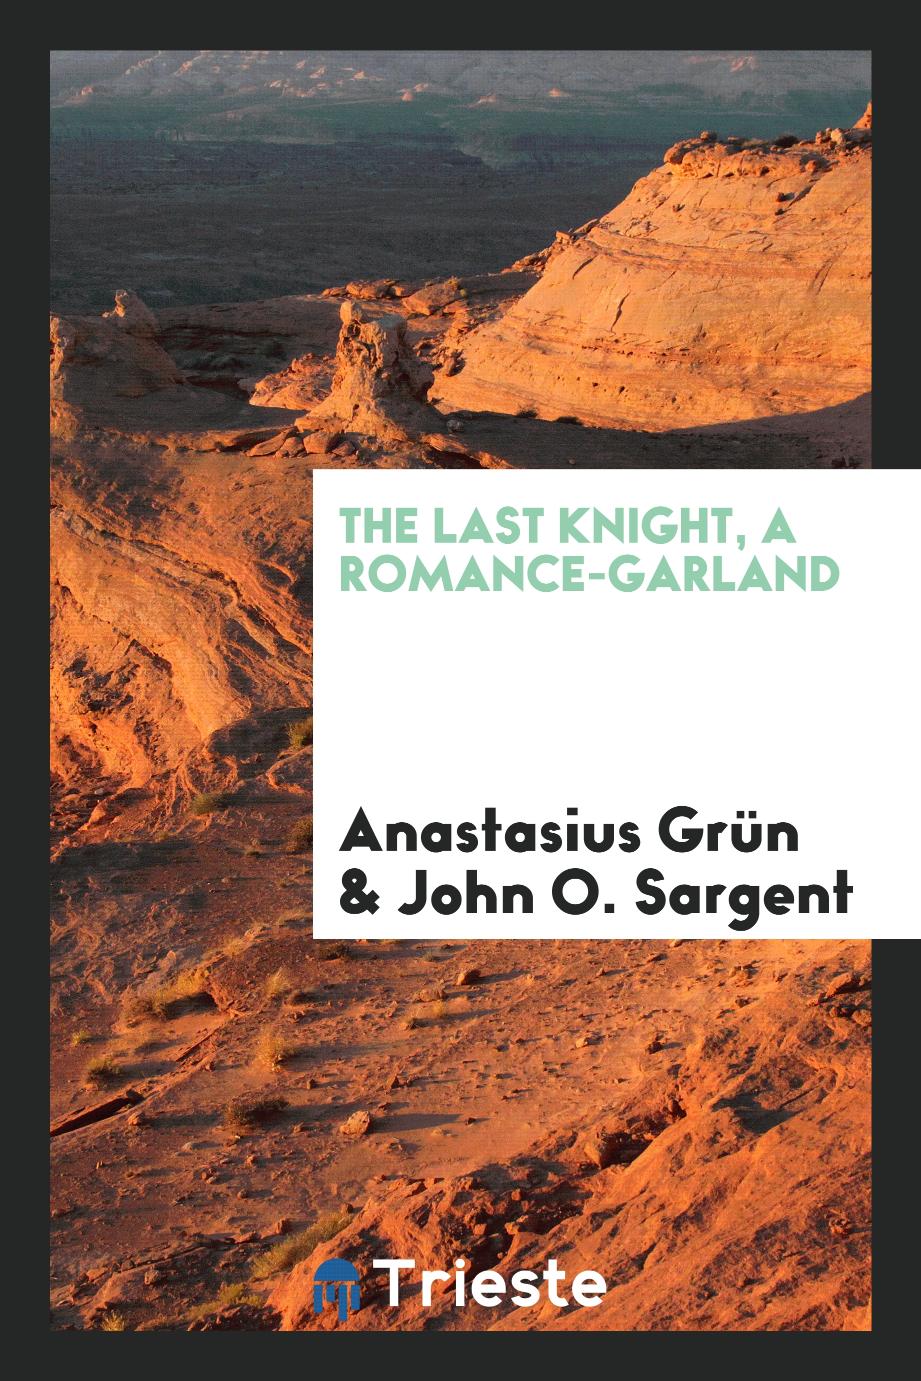 The last knight, a romance-garland